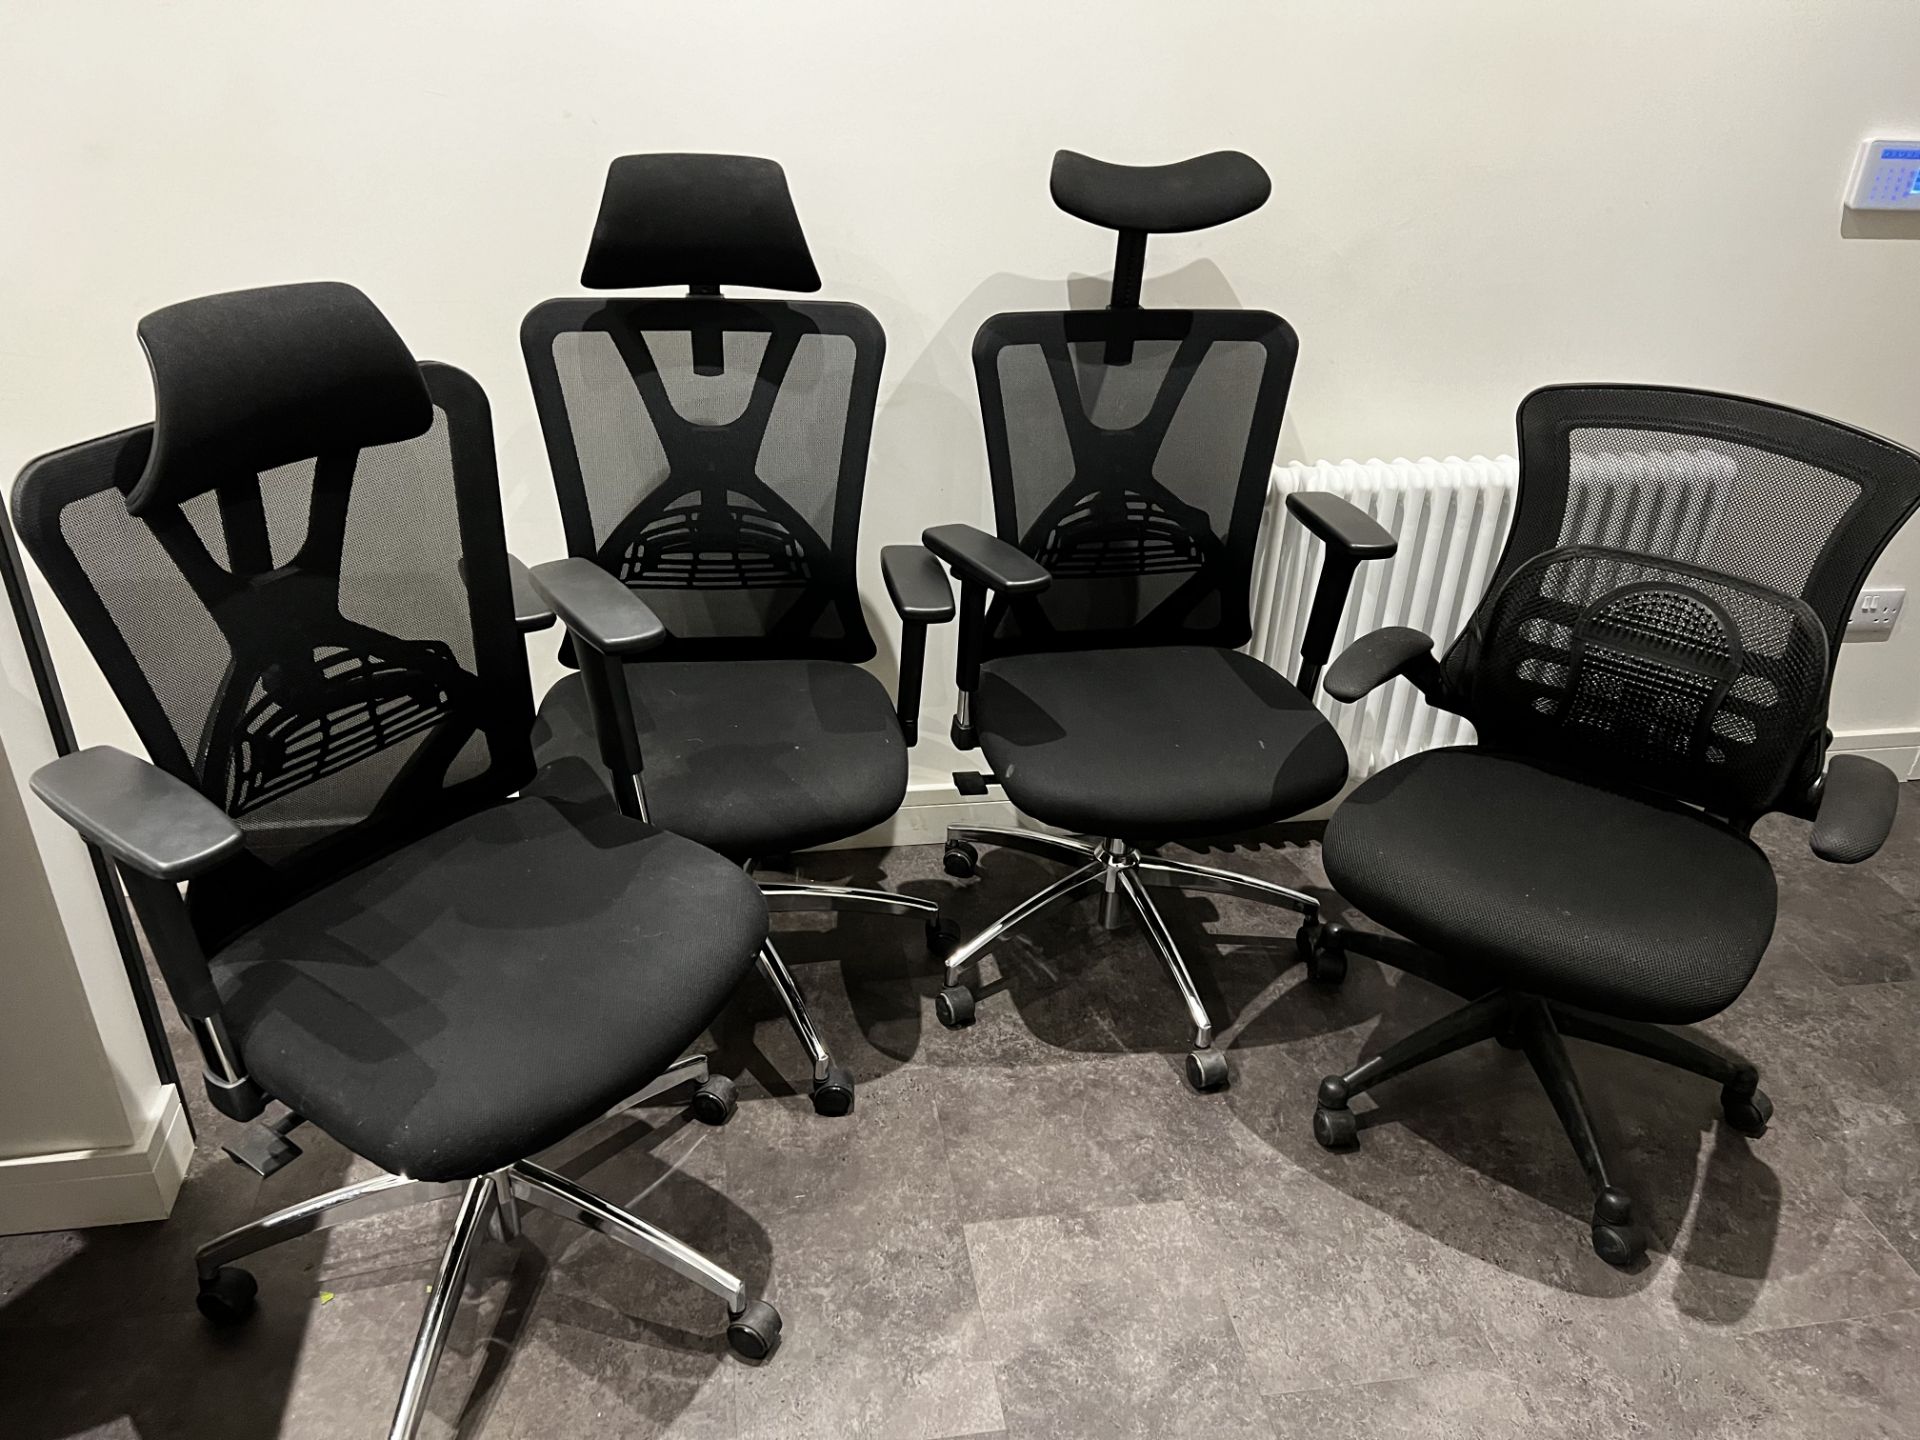 4 x mesh back Computer swivel chairs